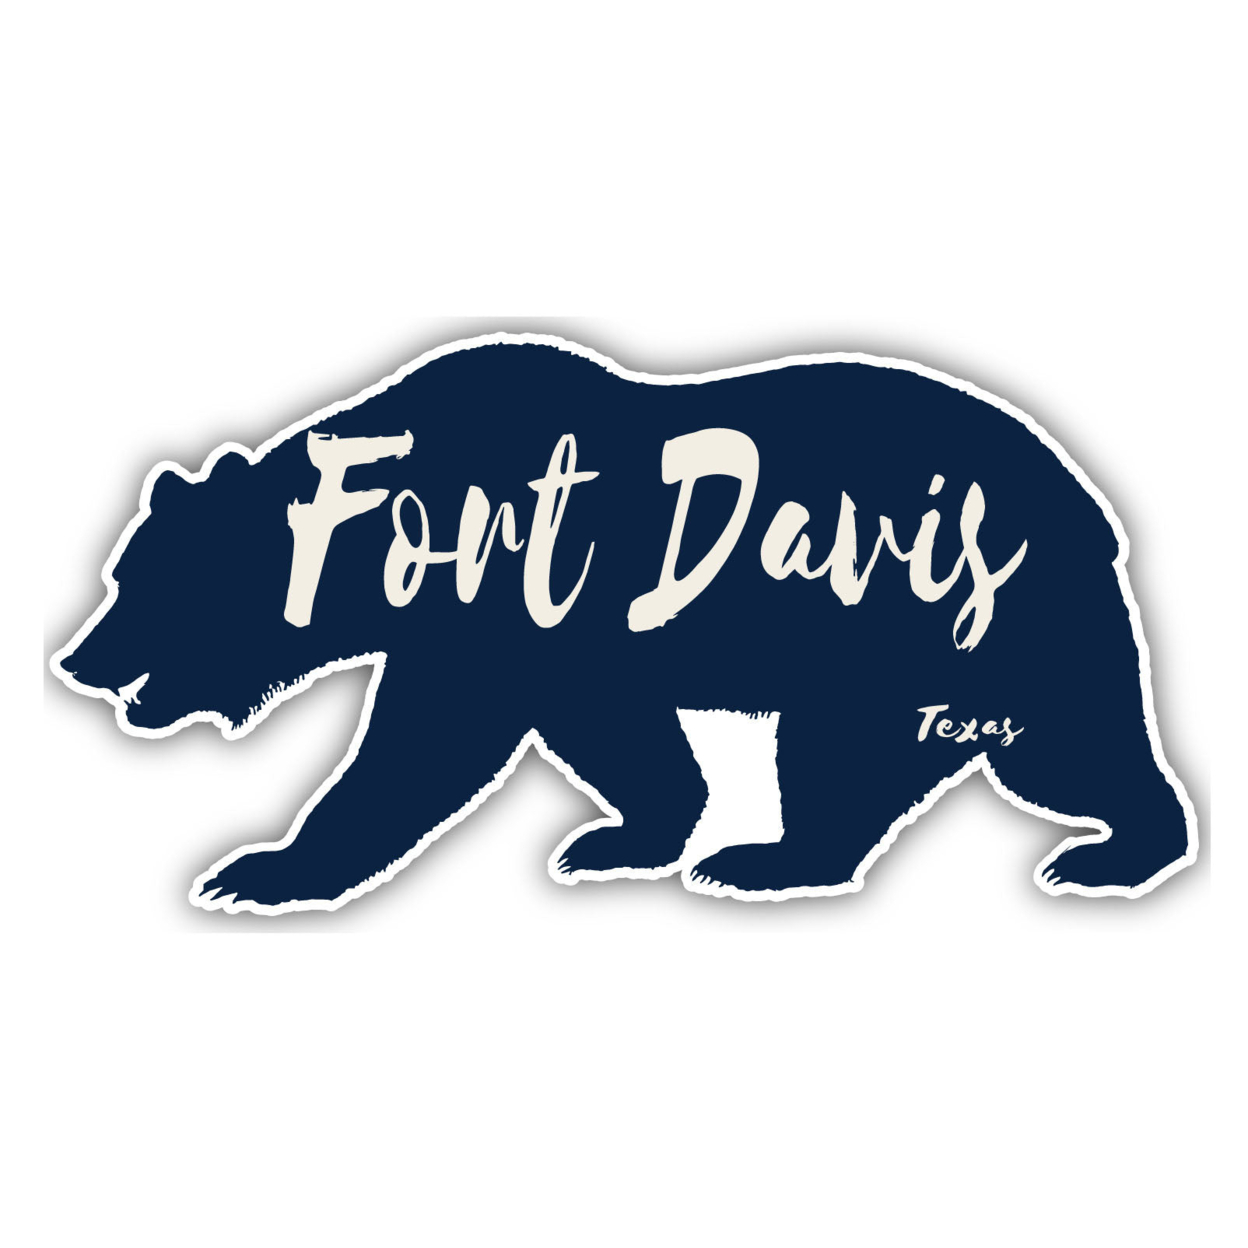 Fort Davis Texas Souvenir Decorative Stickers (Choose Theme And Size) - Single Unit, 2-Inch, Adventures Awaits